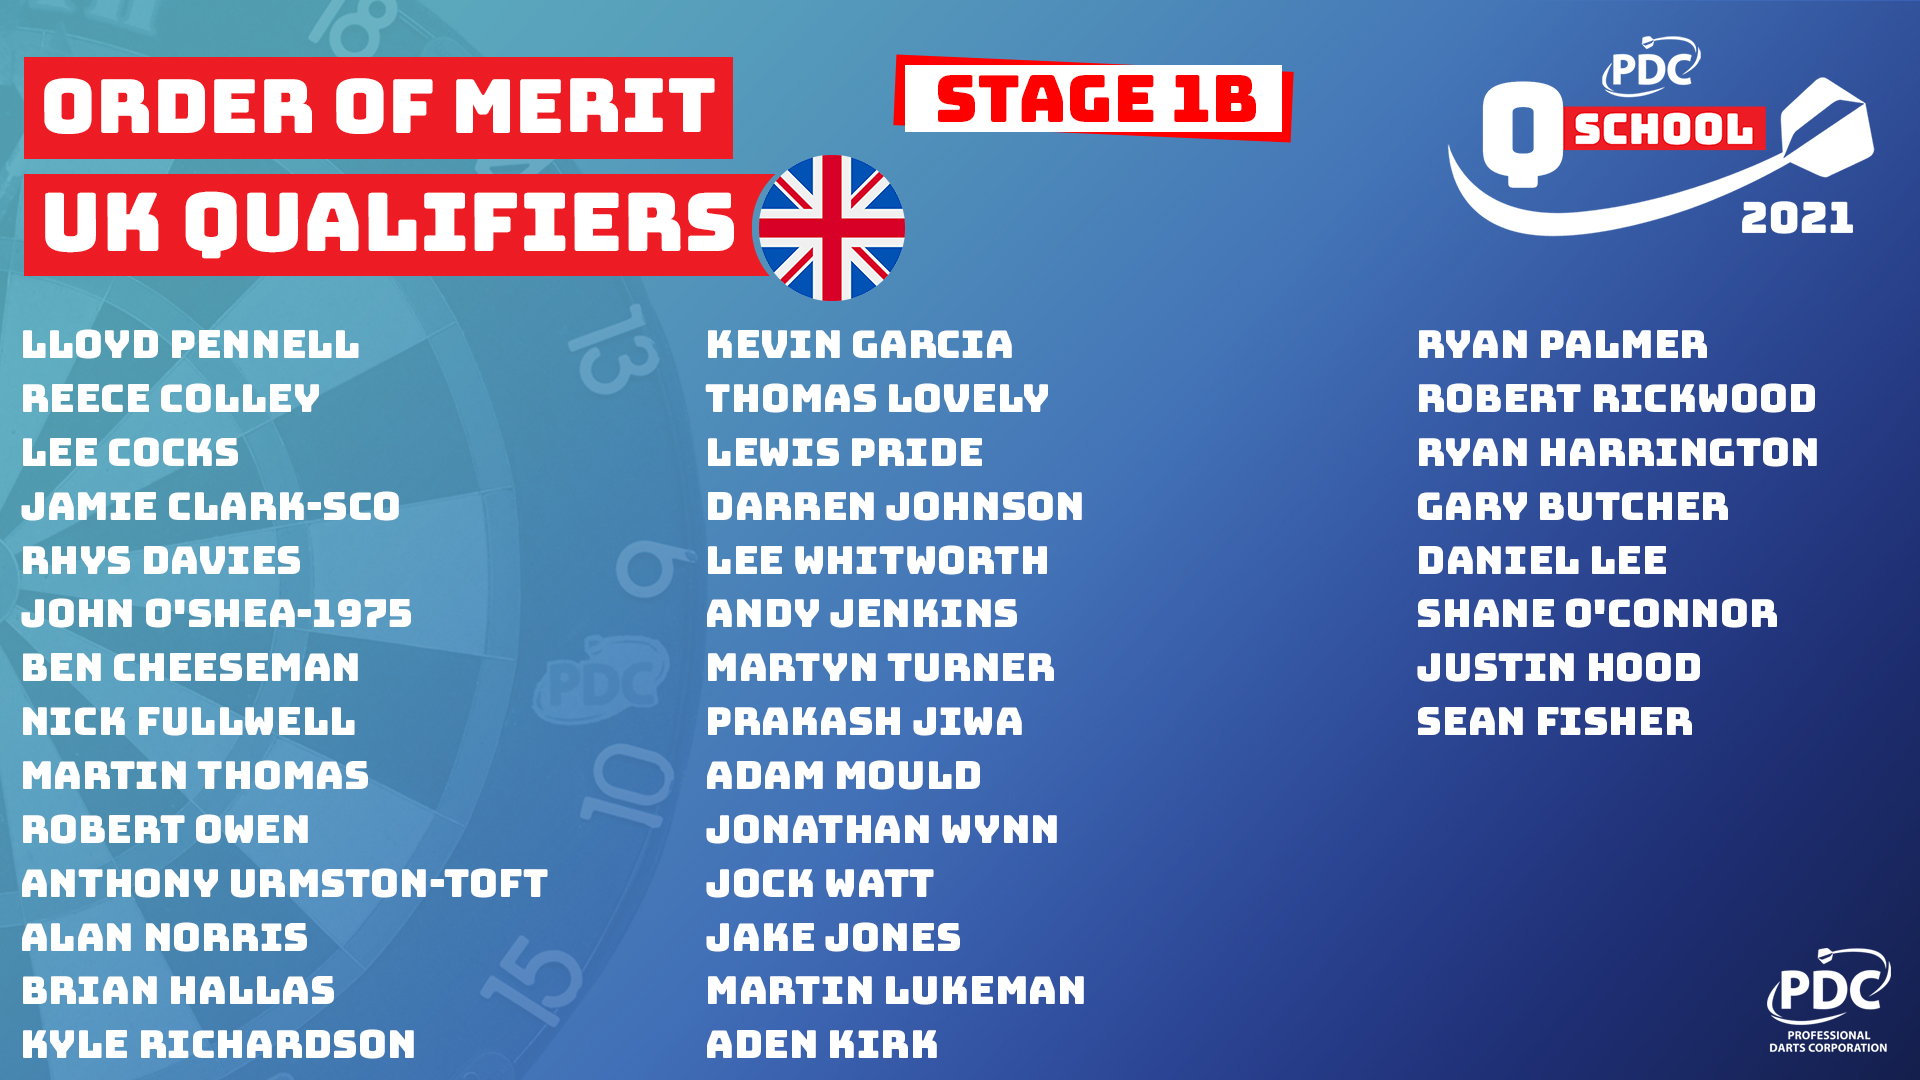 UK Stage 1B Order of Merit Qualifiers